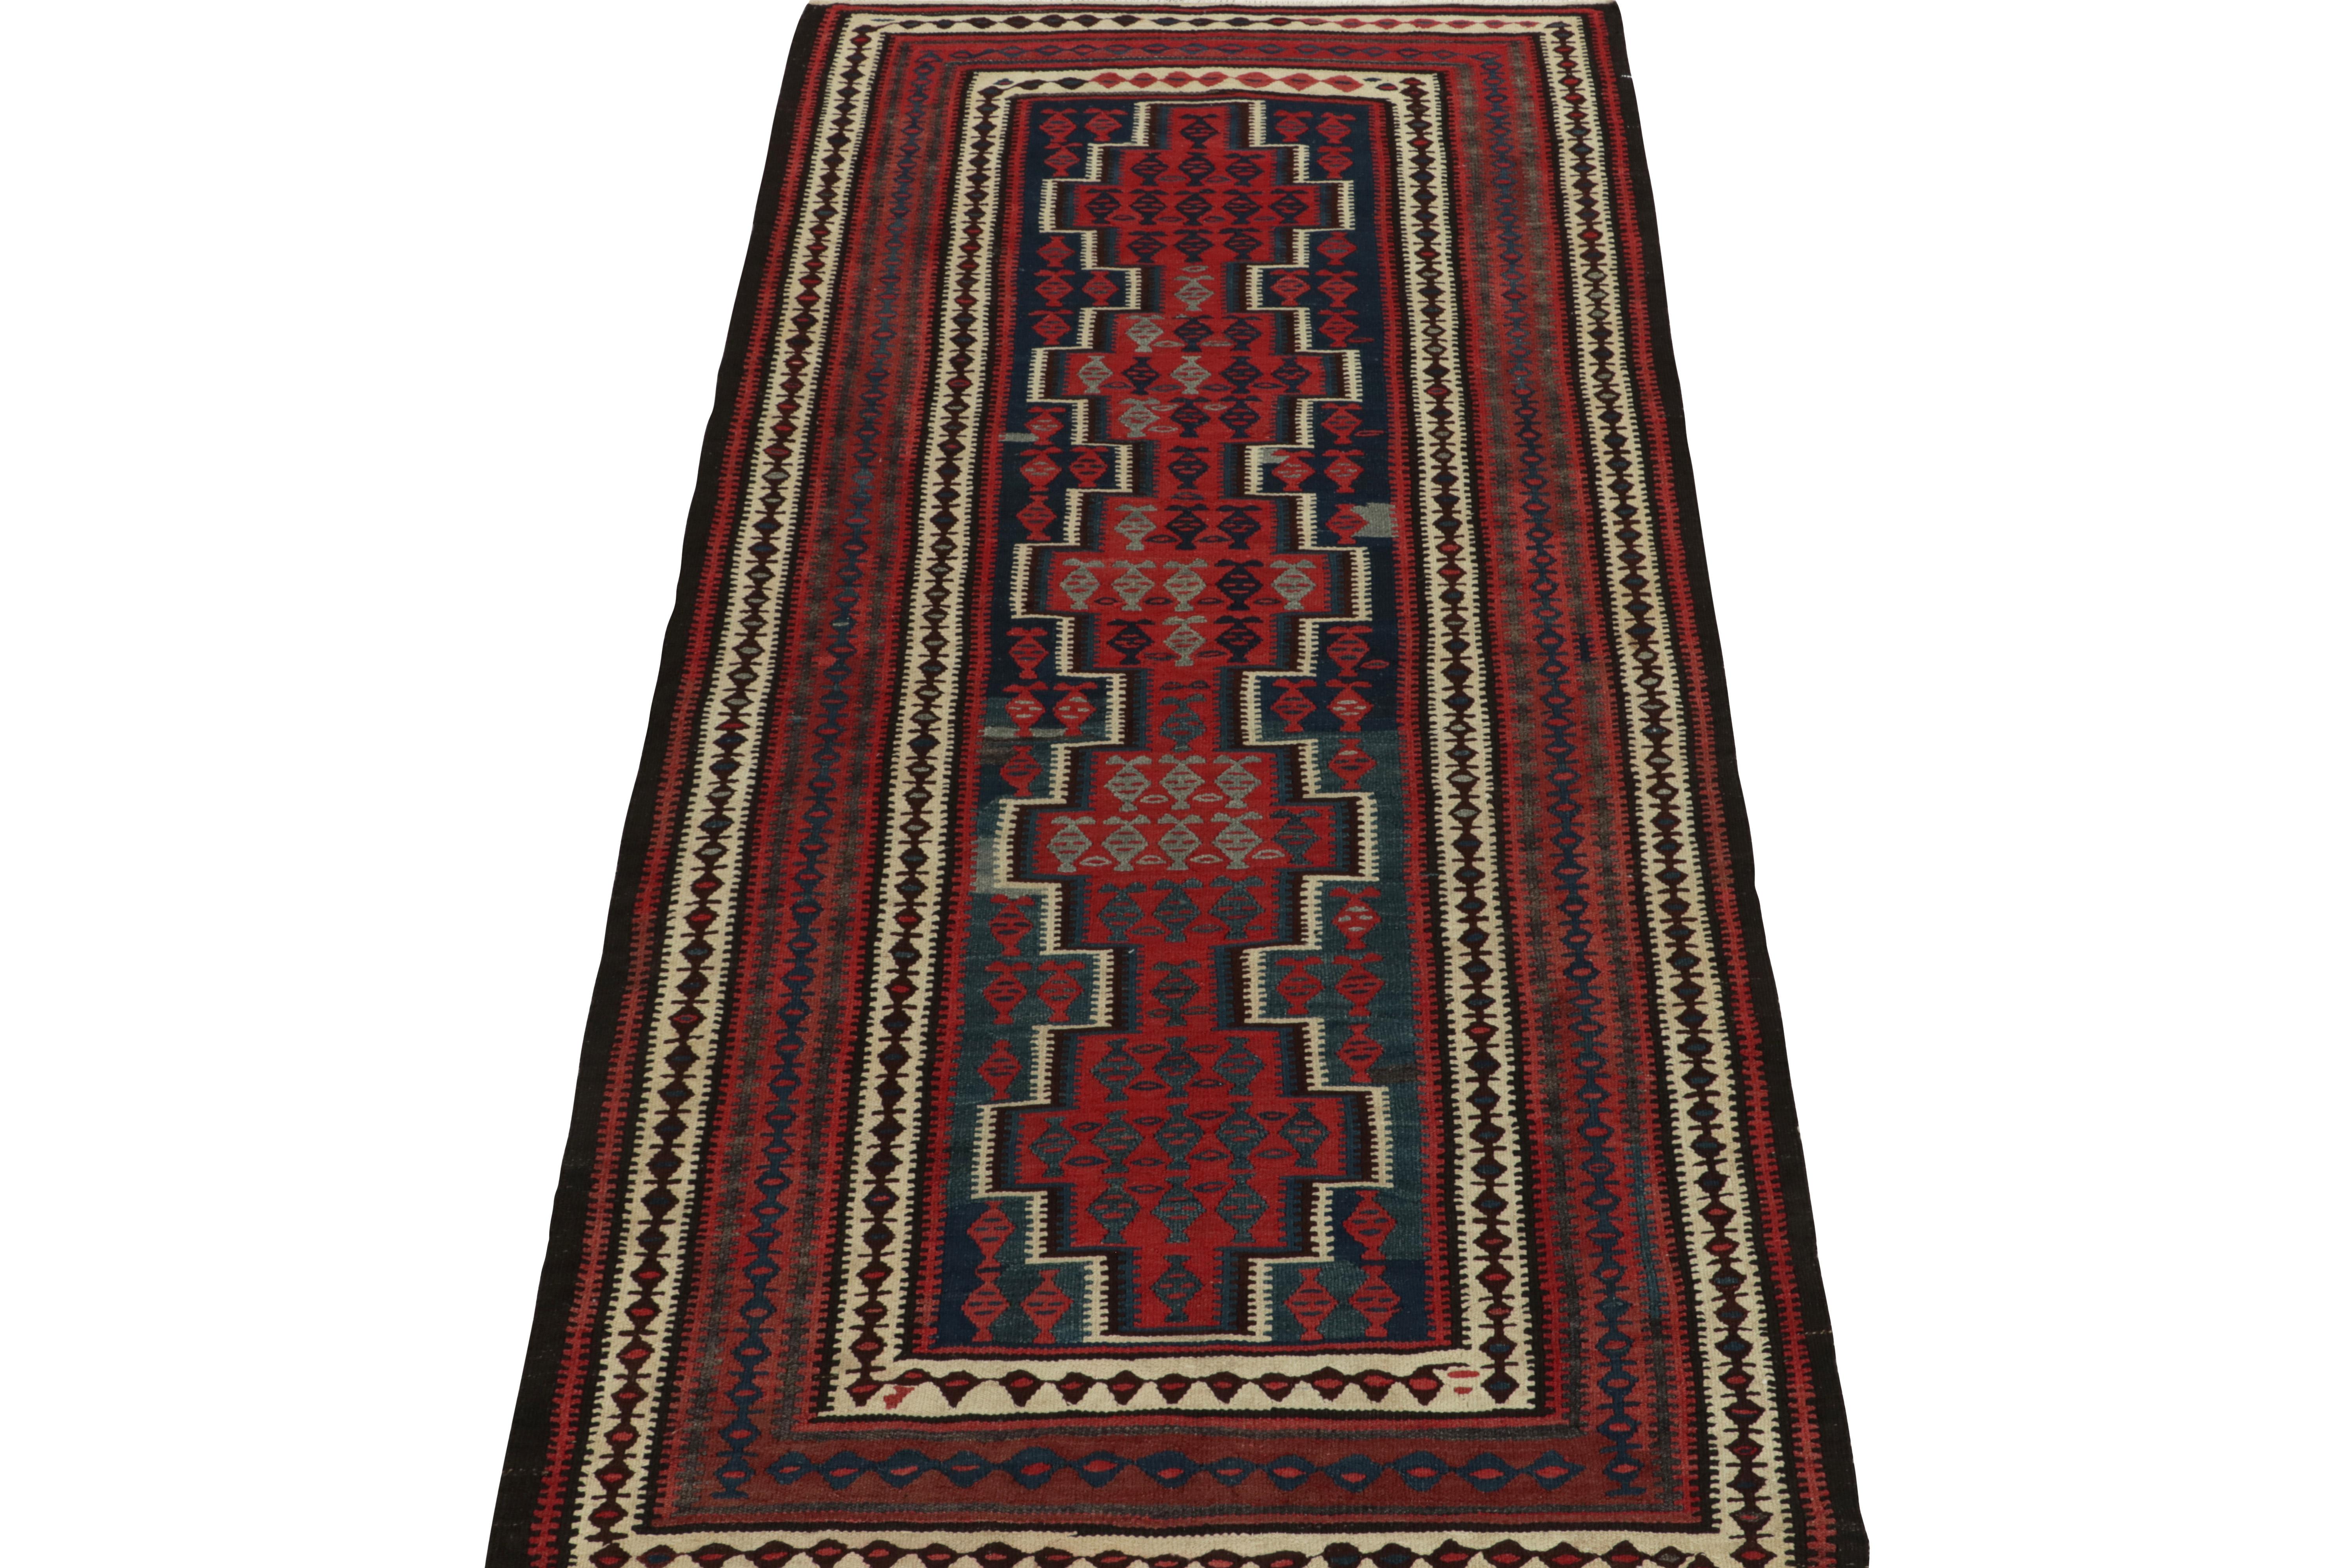 Tribal 1950s Vintage Kilim rug in Red, Blue and Brown Geometric Patterns by Rug & Kilim For Sale